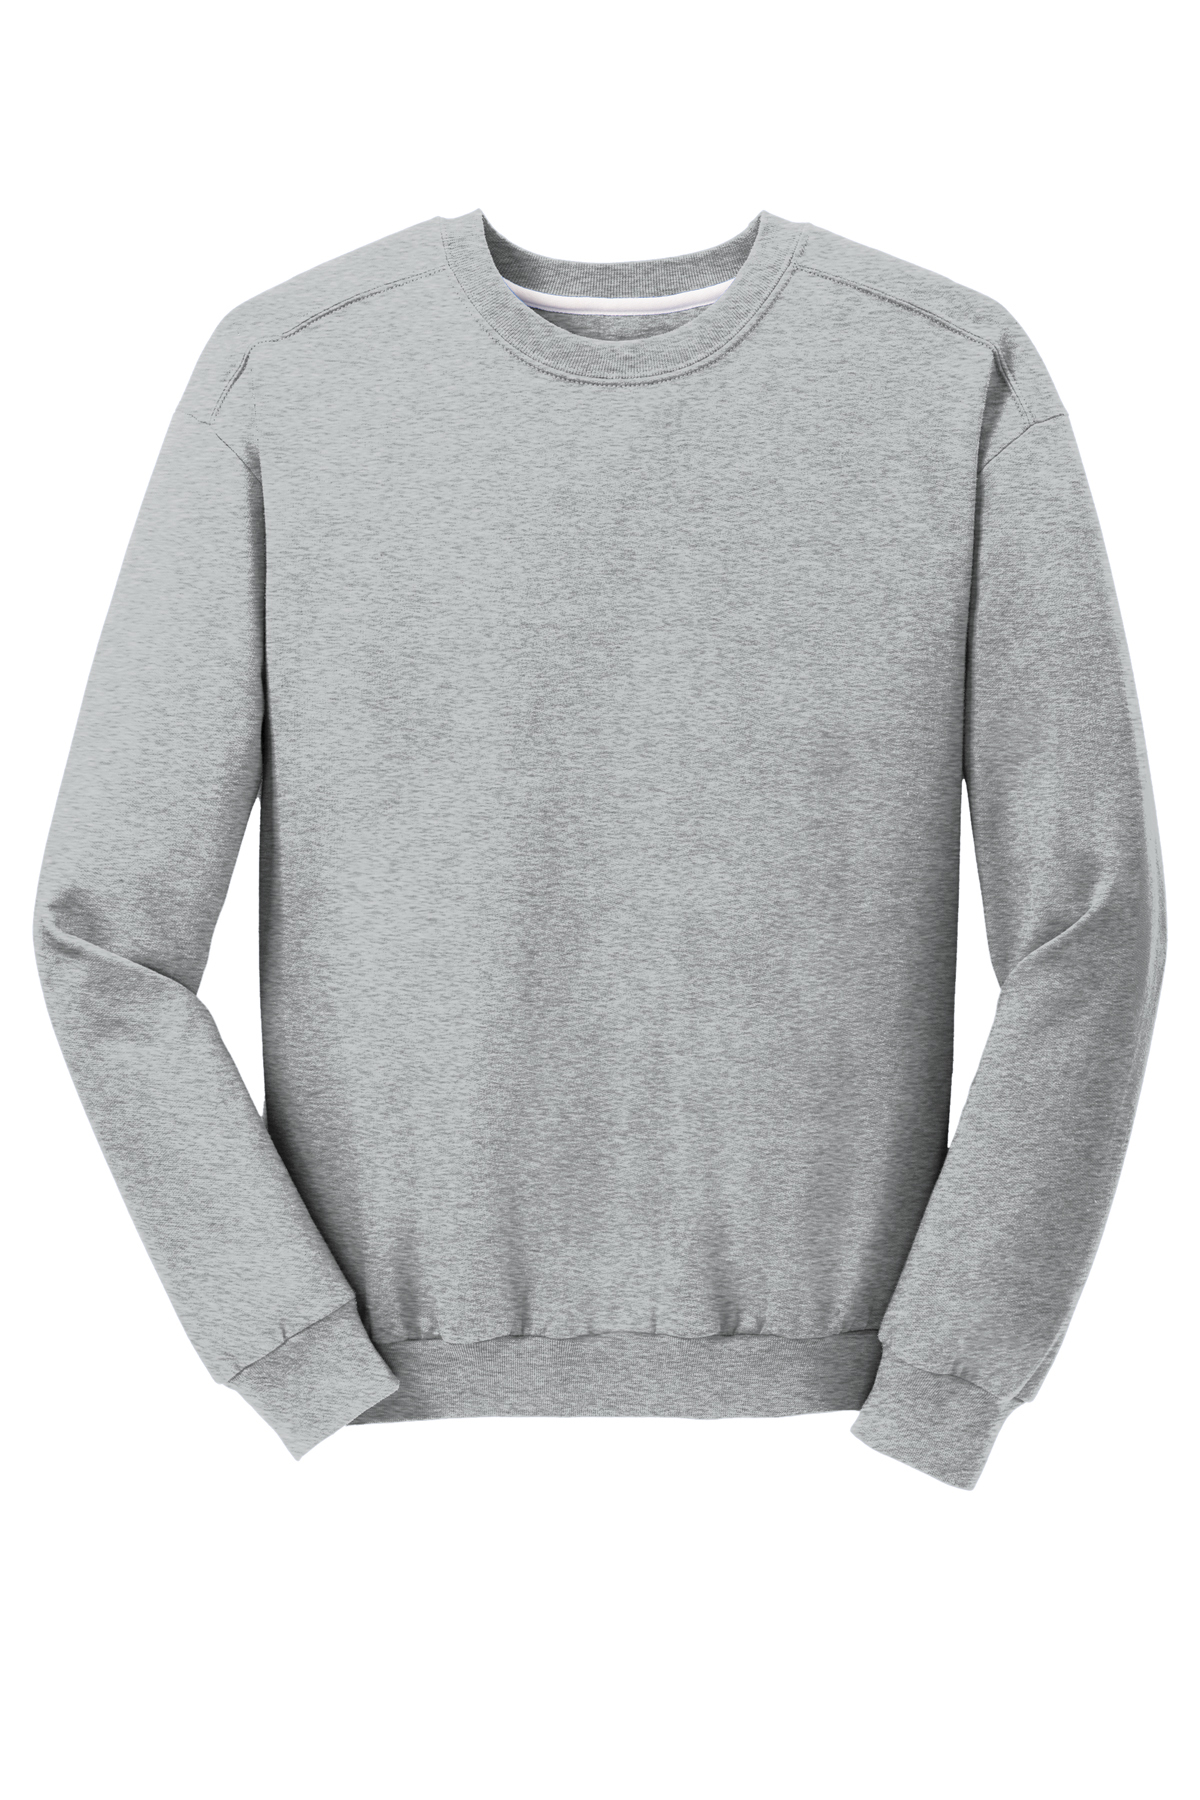 Anvil Crewneck Sweatshirt | Product | SanMar